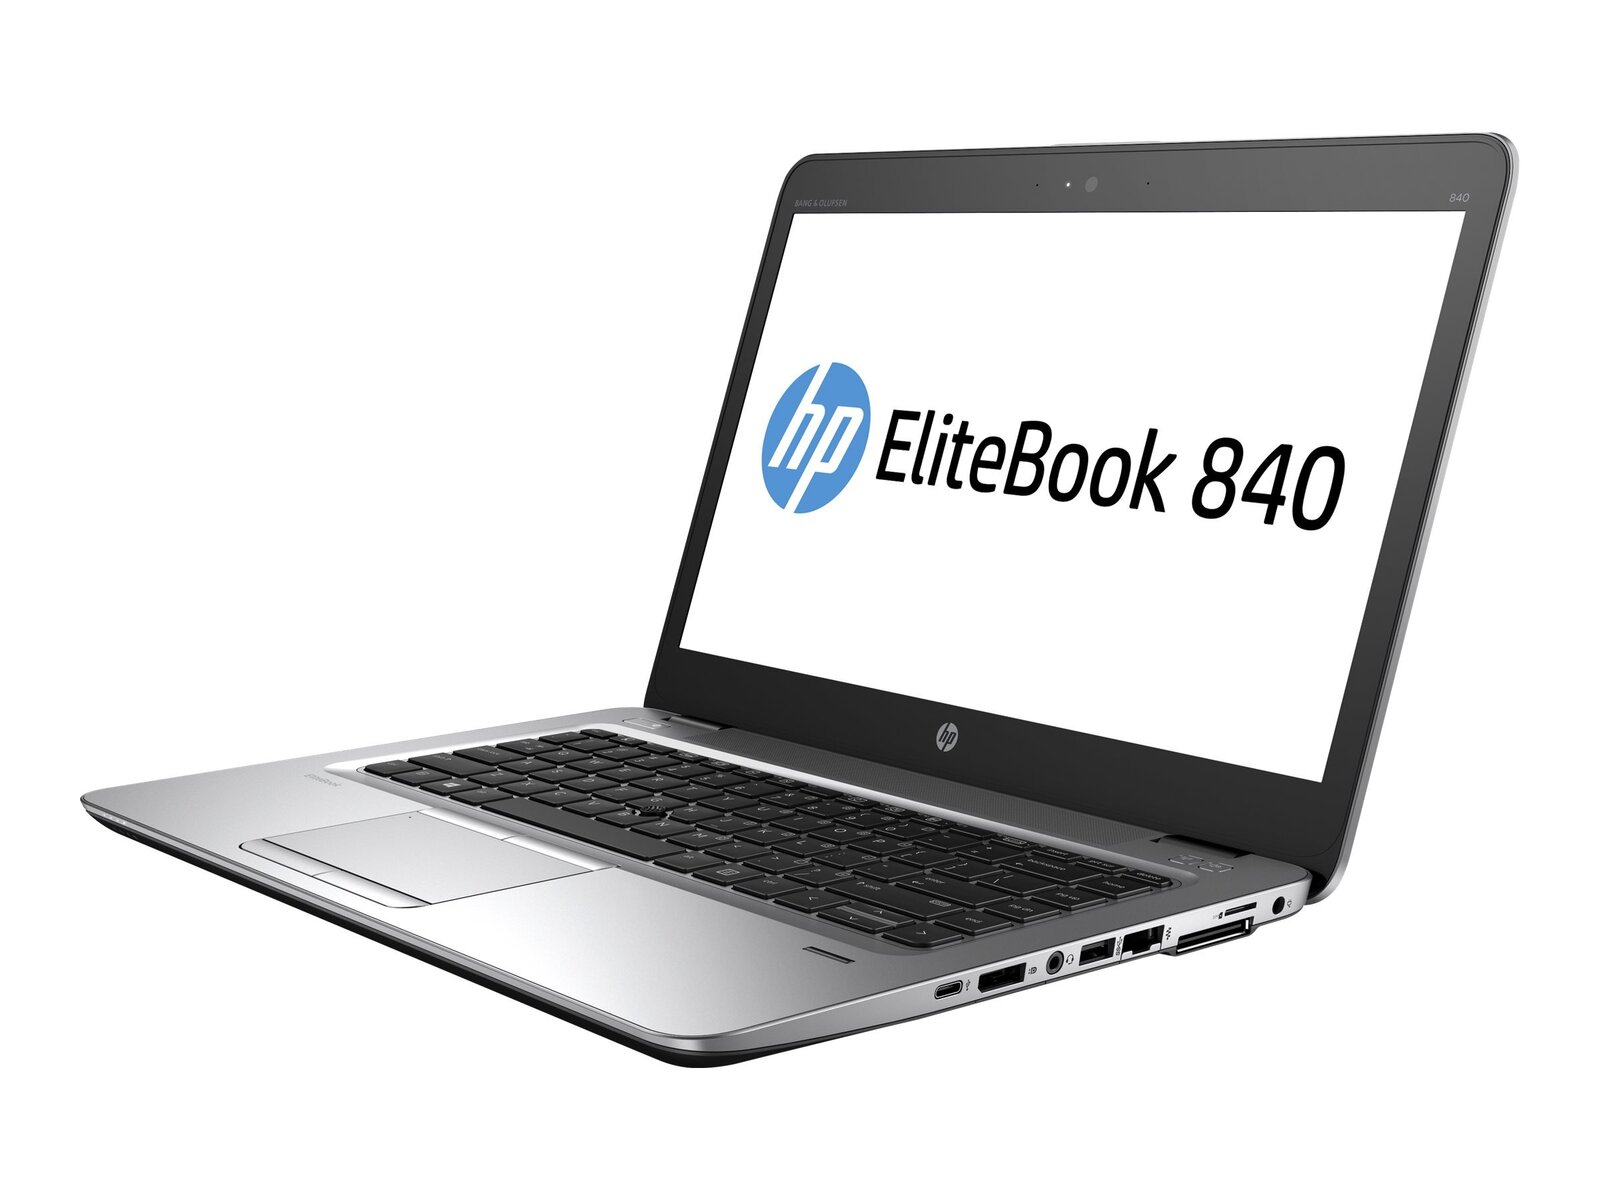 HP EliteBook 840 G3 Intel i5 6300U 2.40GHz 8GB RAM 128GB SSD 14" Win 10 Image 1